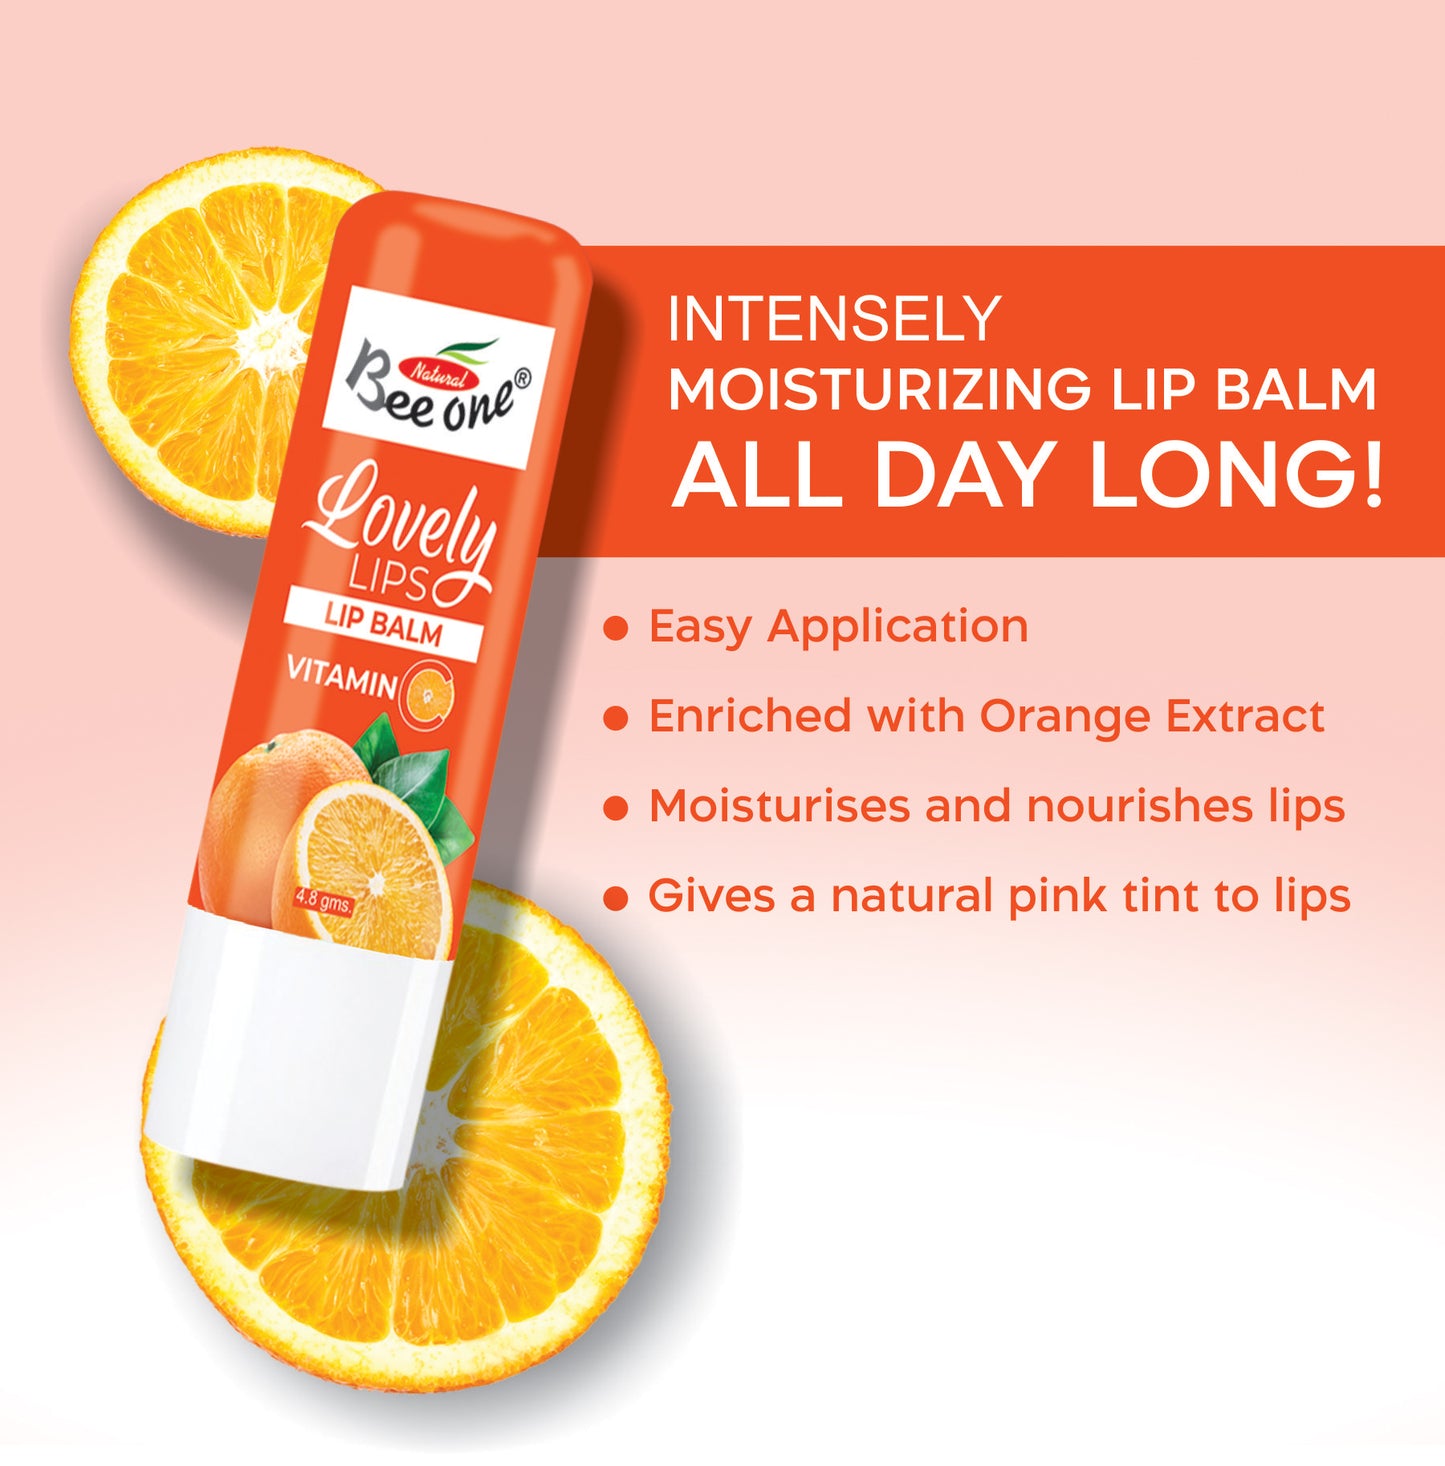 Lovely Lips Vitamin C Lip Balm